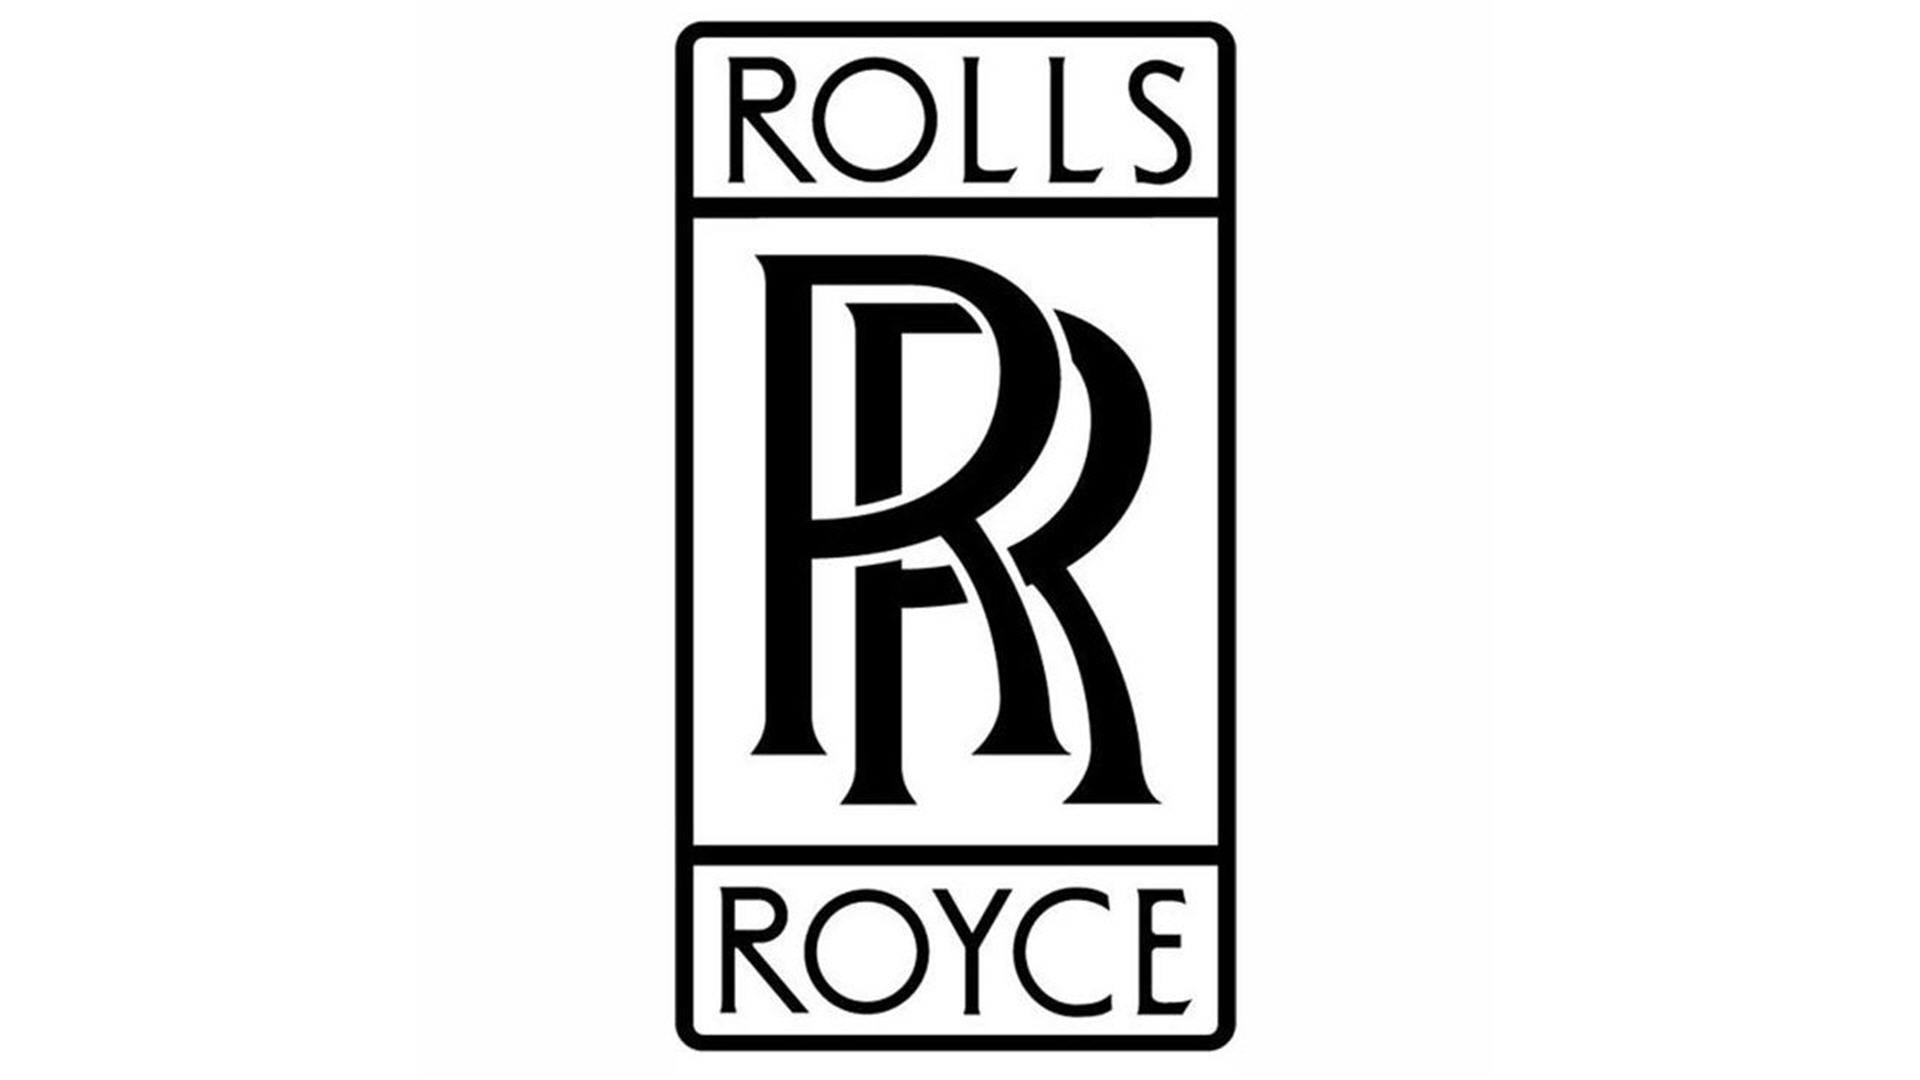 2014 rolls